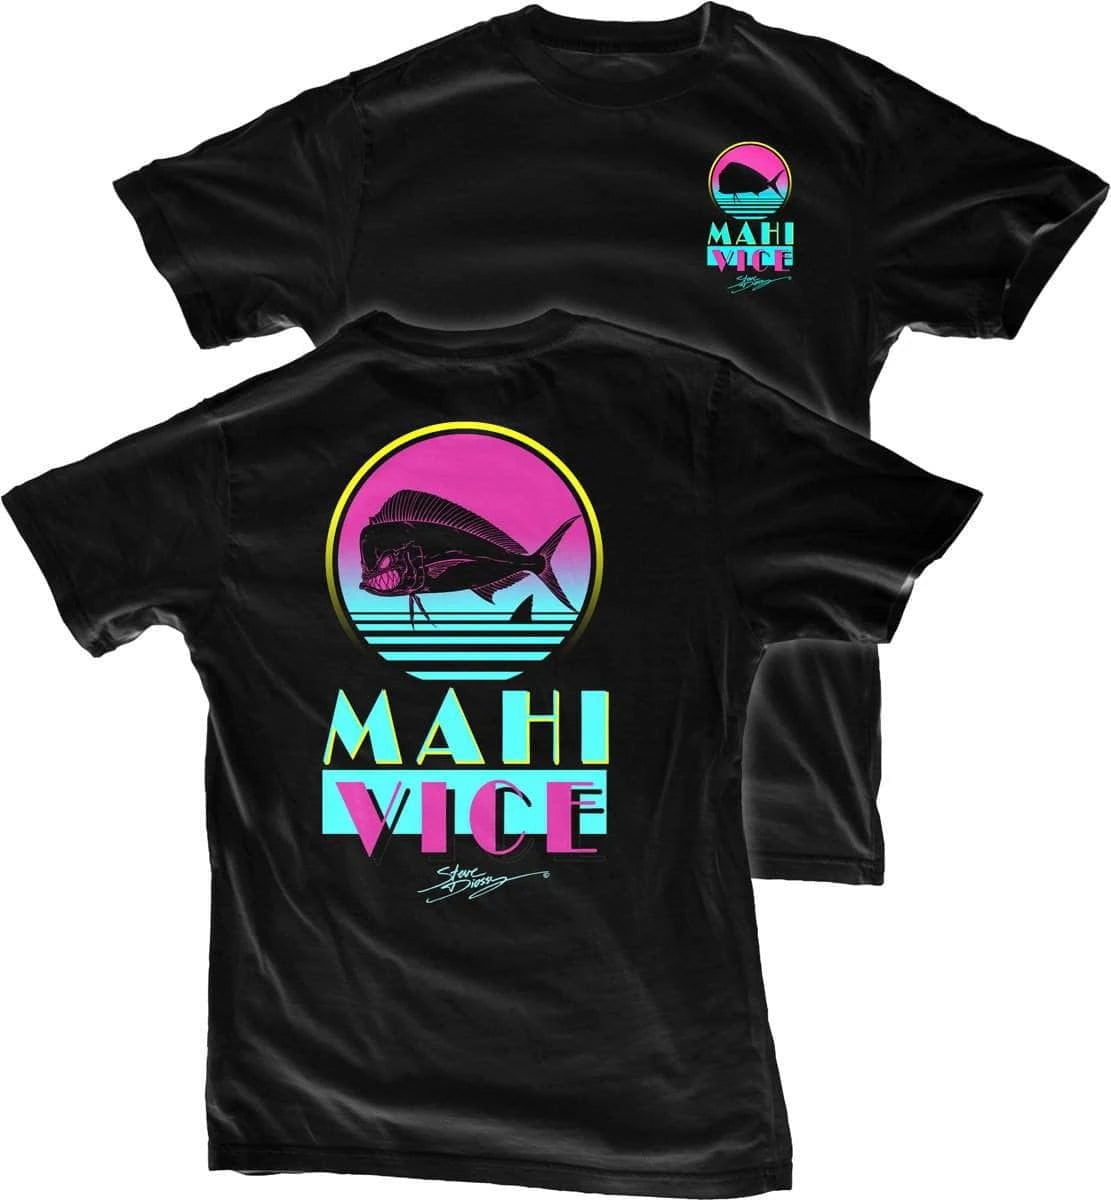 Mahi Vice Retro Cotton T-Shirt - Steve Diossy Marine Artist